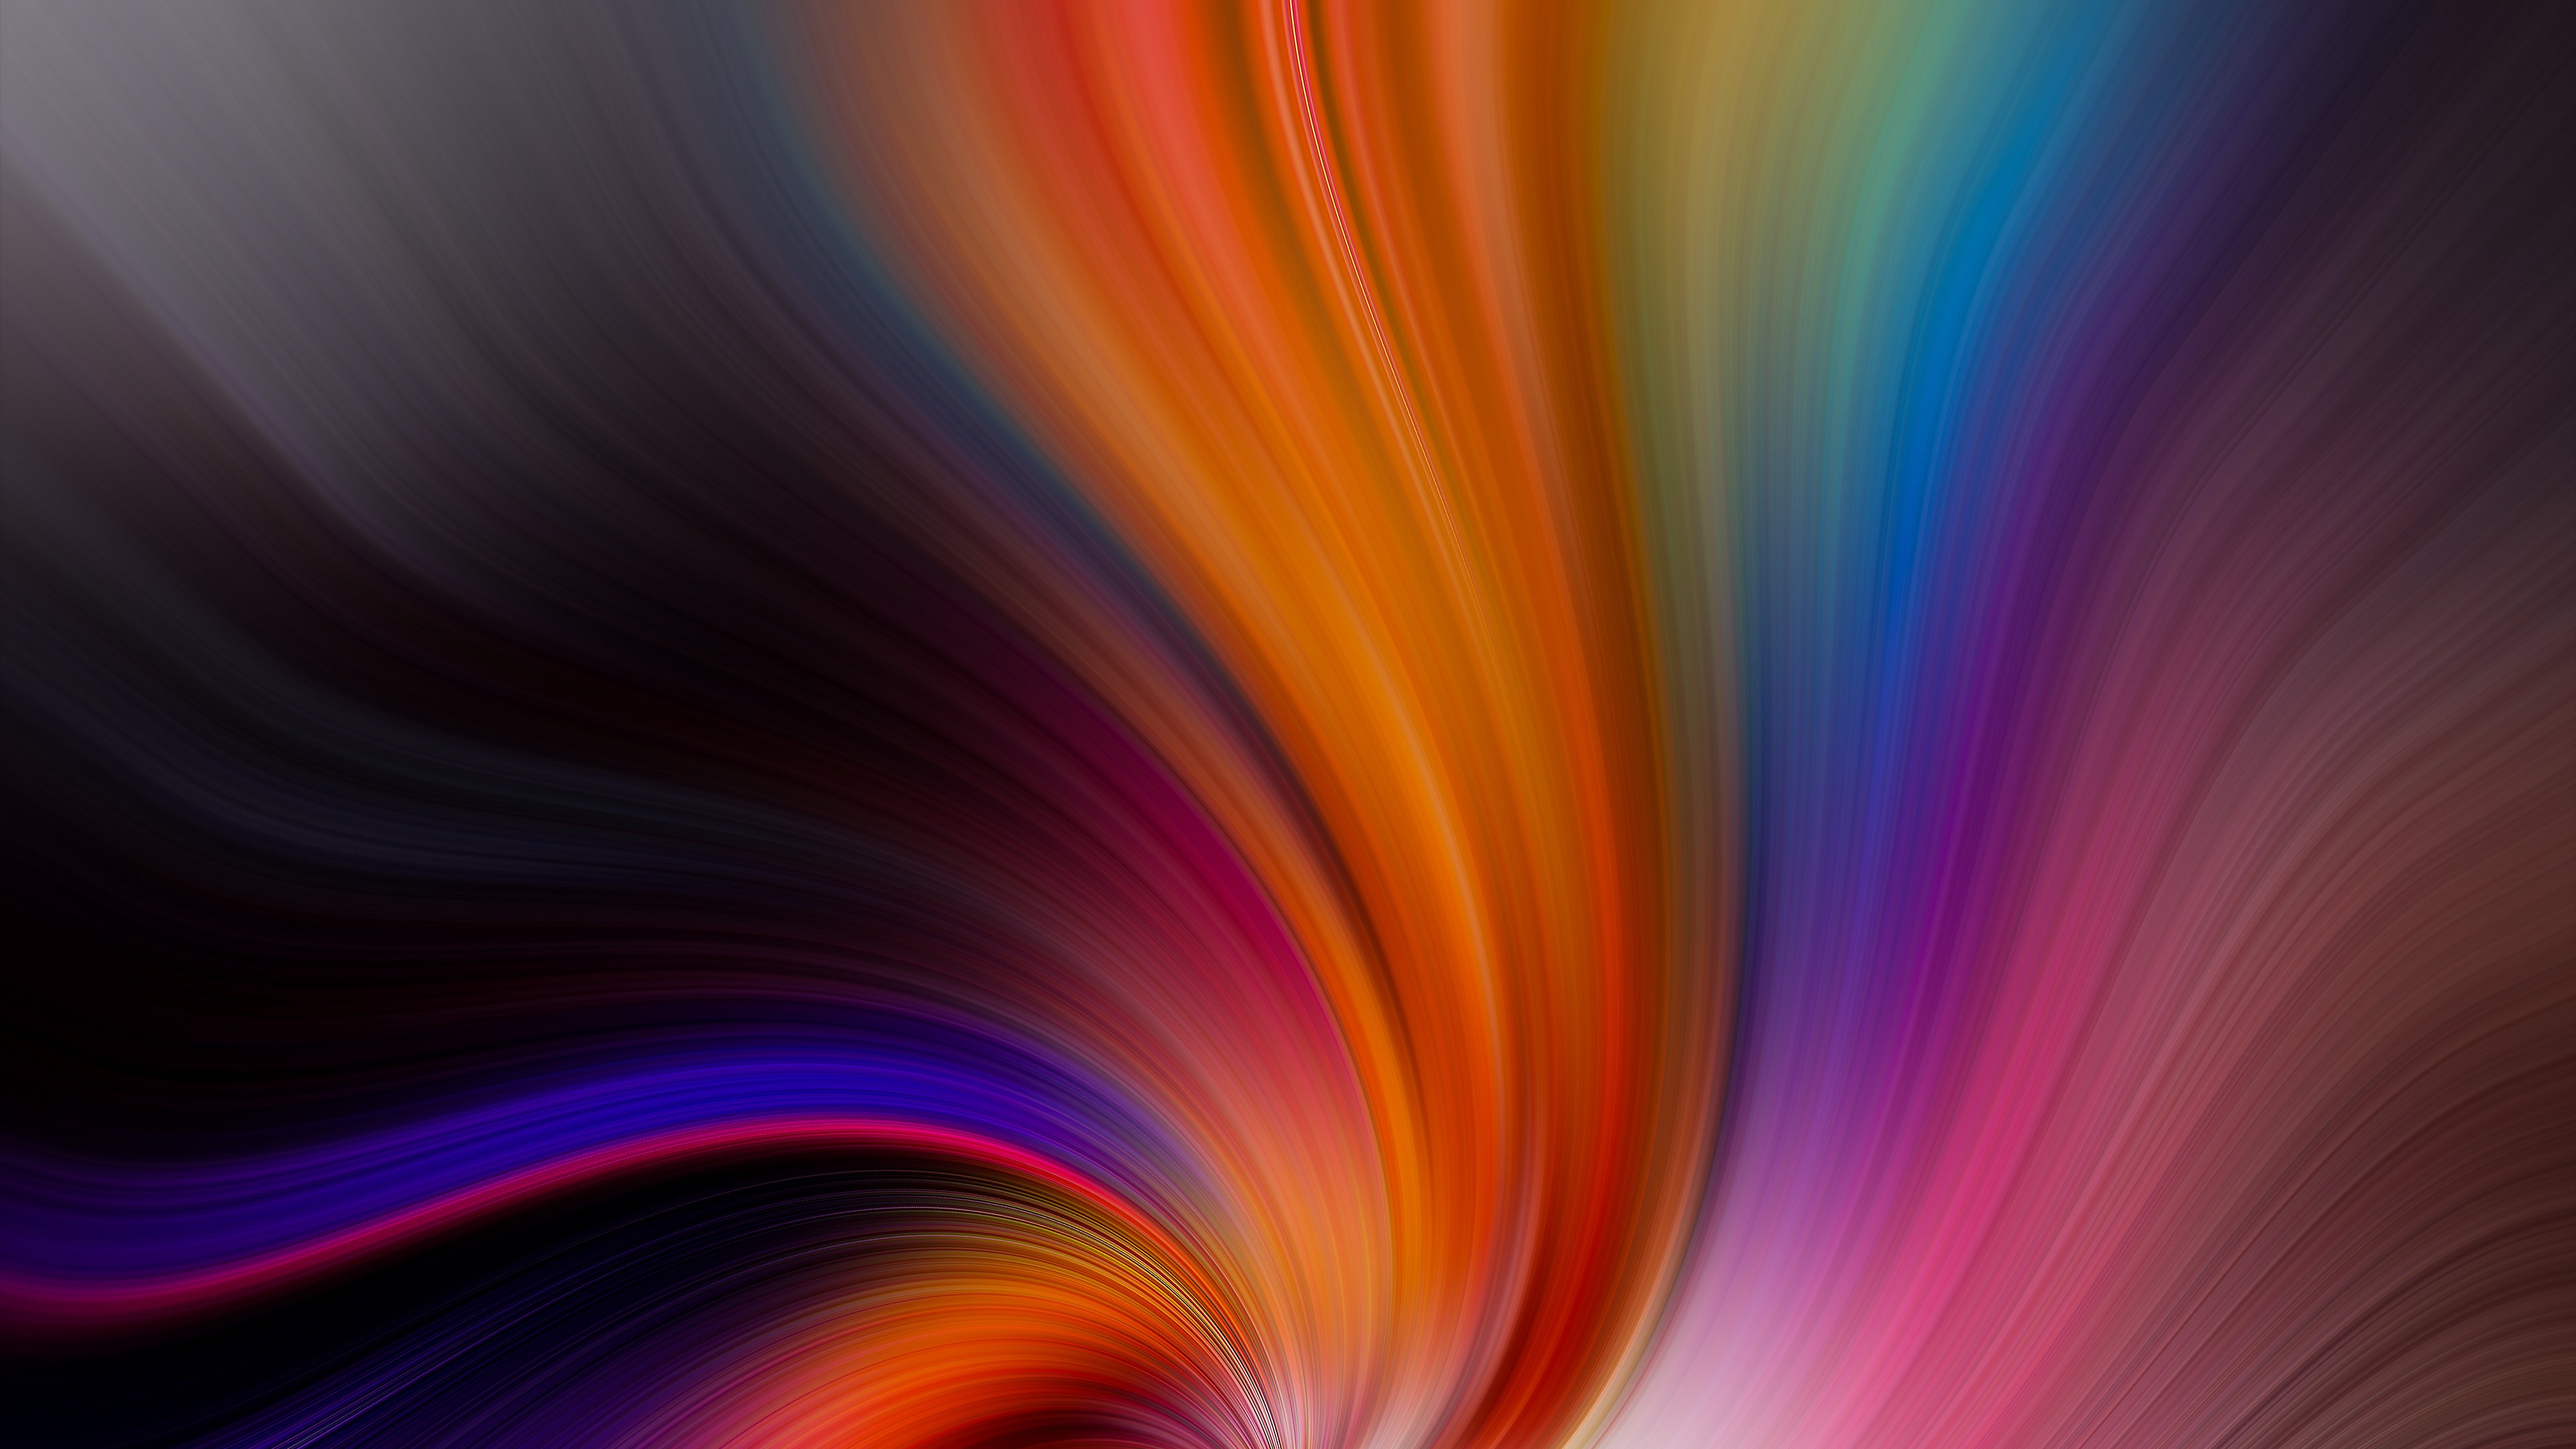 Colors in swirl Abstract Wallpaper 4k Ultra HD